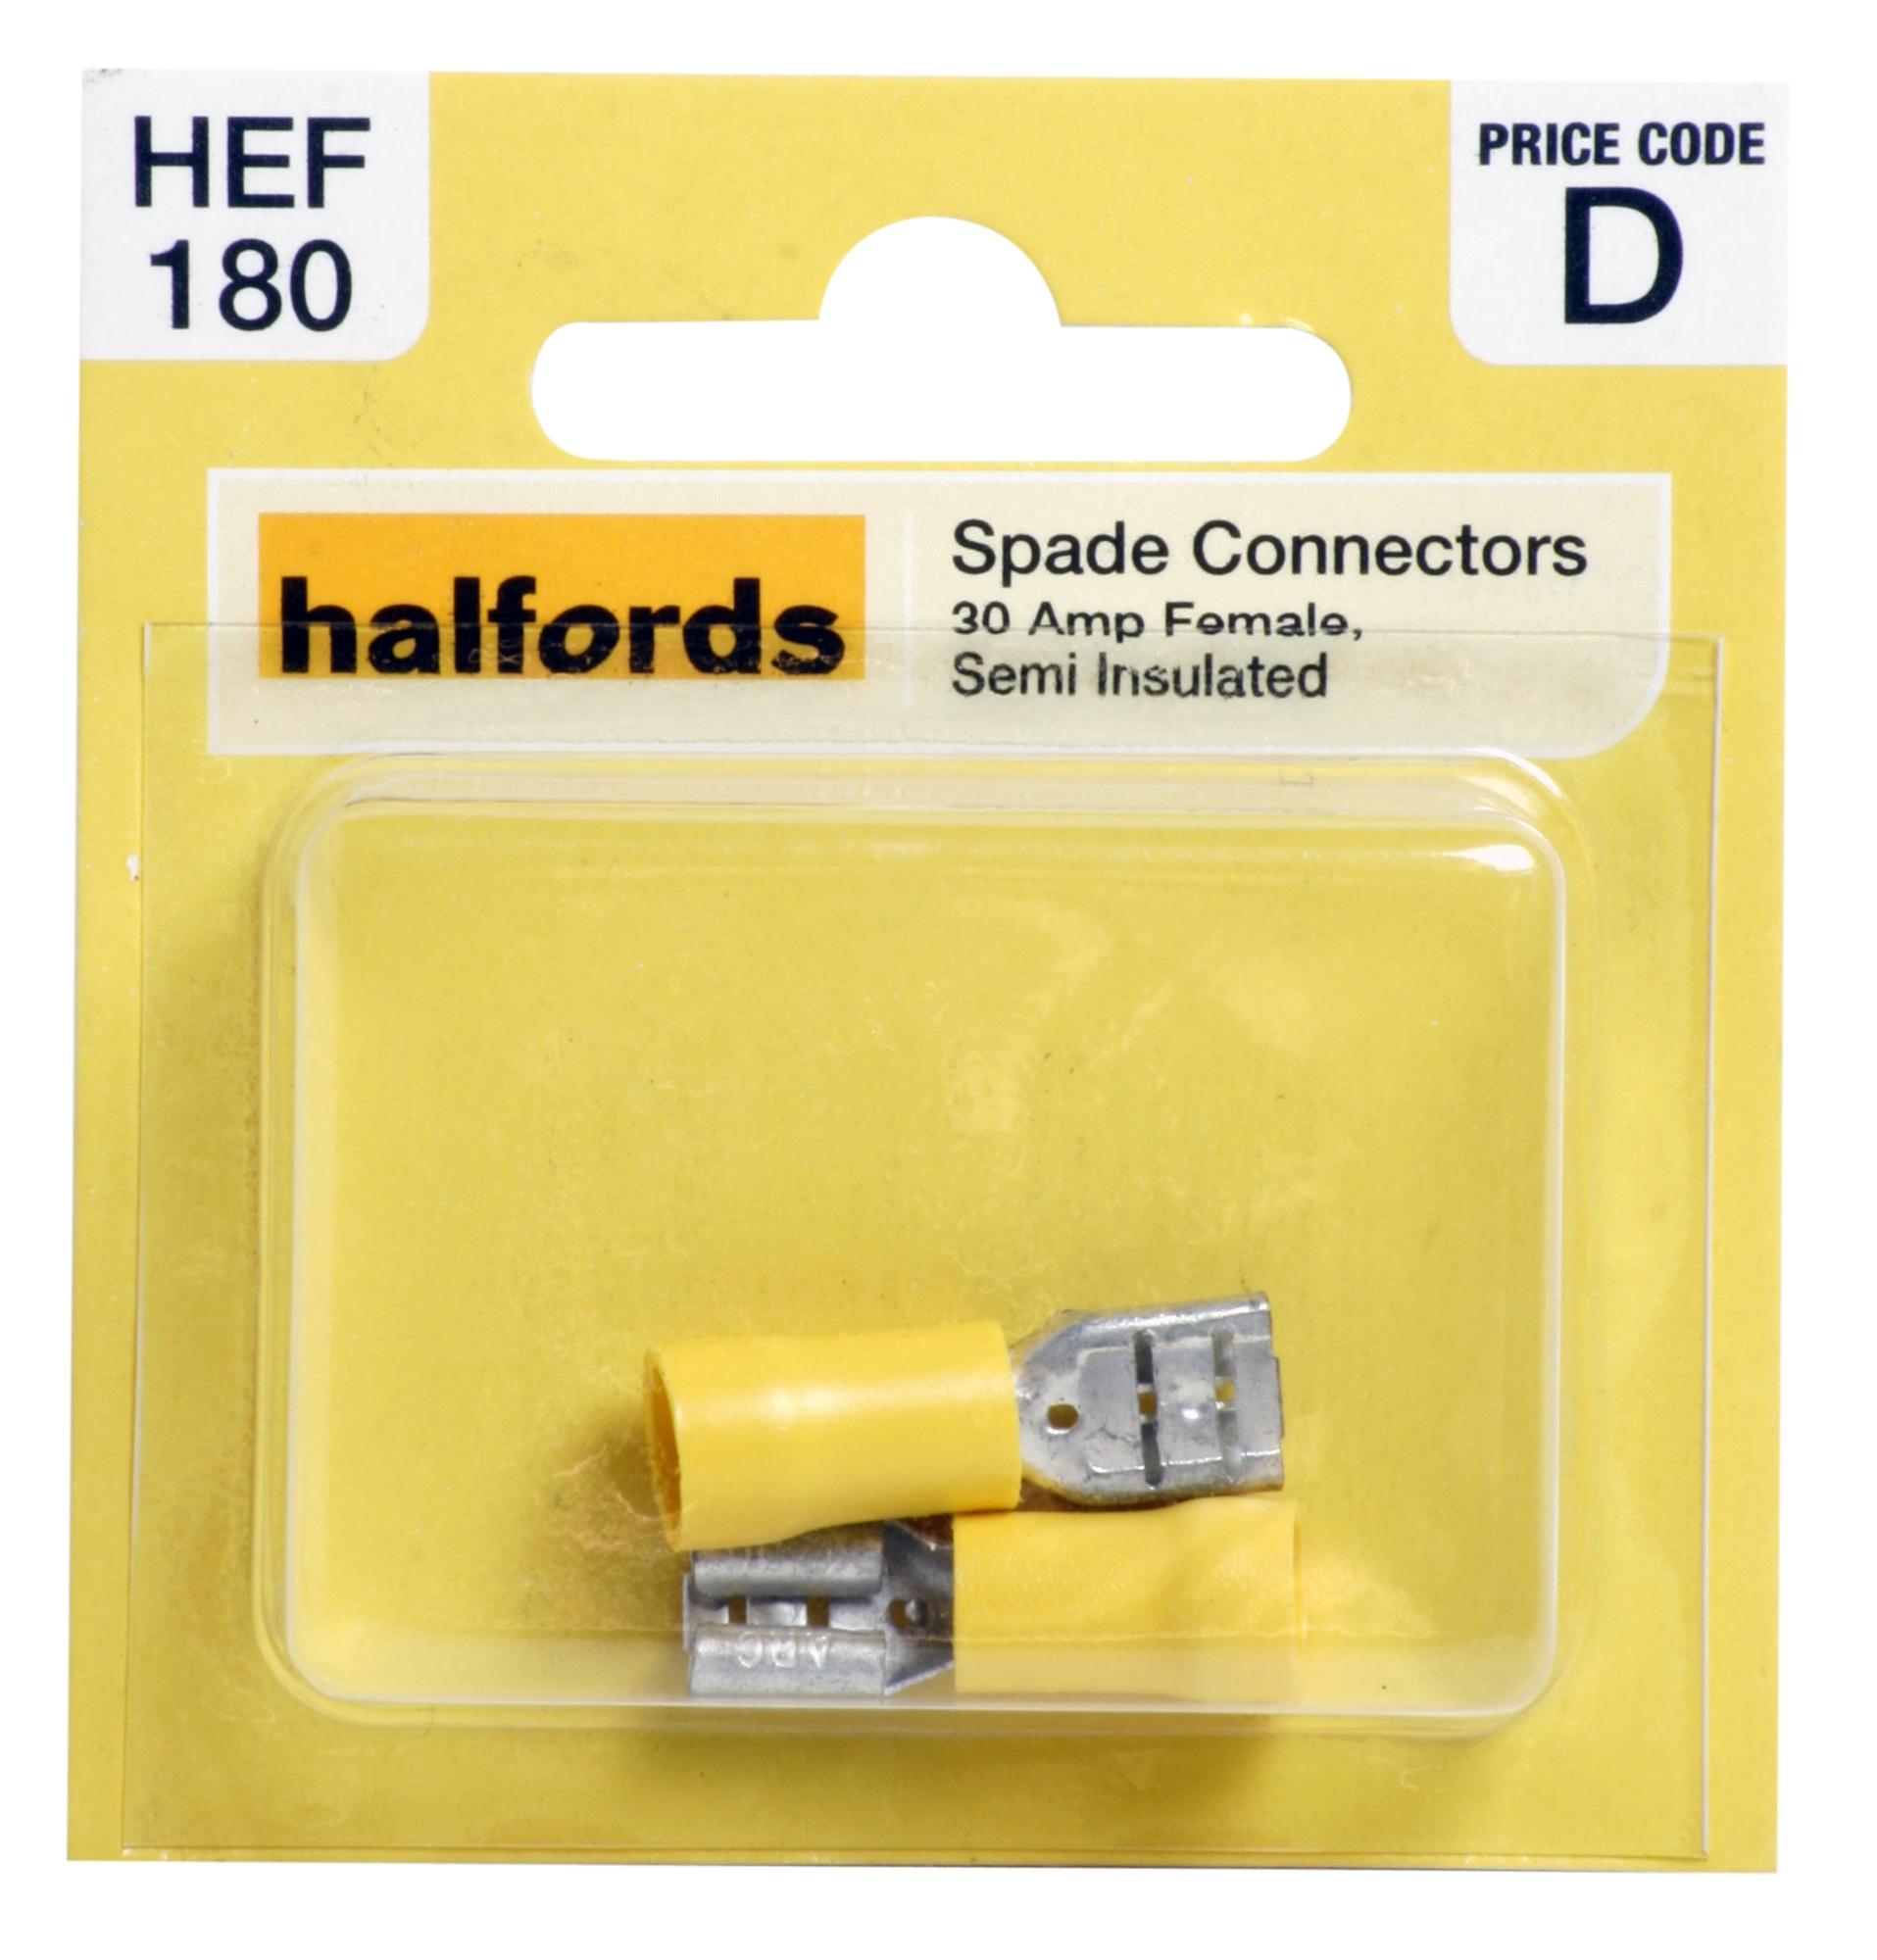 Halfords Spade Connectors 30 Amp Female Semi Insulated